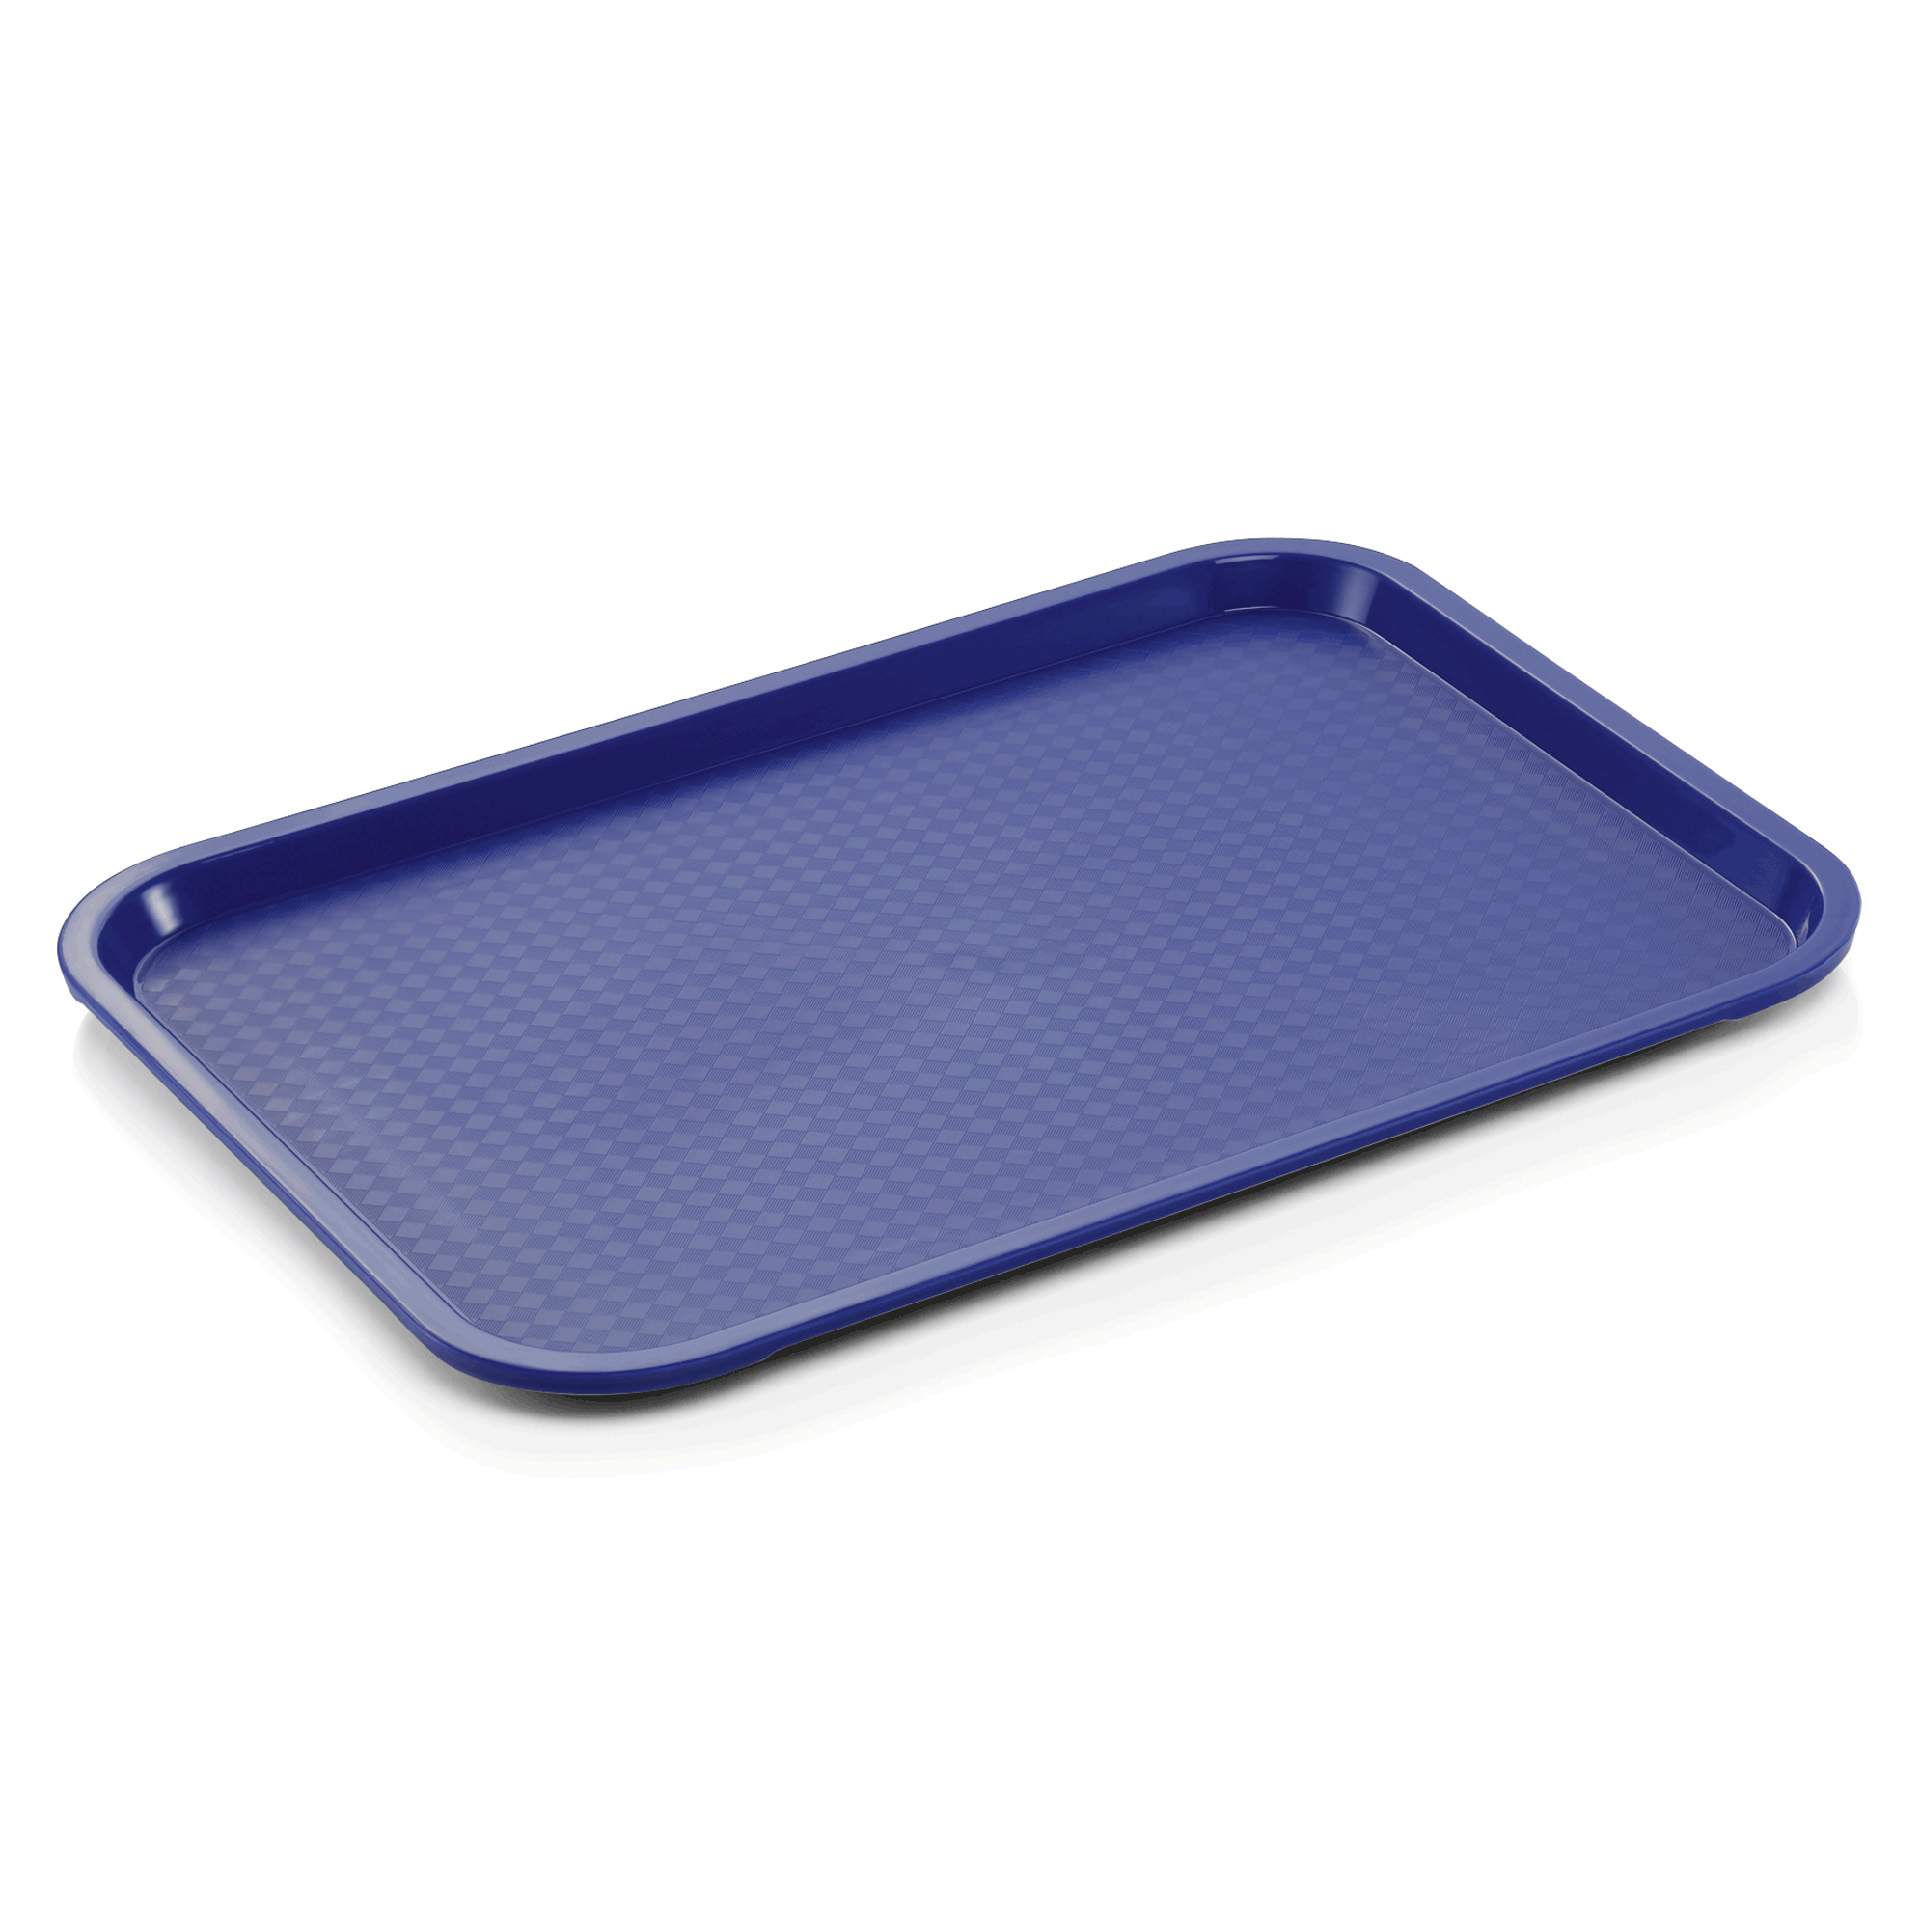 Tablett - Stapelnocken - Serie 9220 - dunkelblau - Abm. 45,5 x 35,5 cm - Polypropylen - premium Qualität - 9221455-A